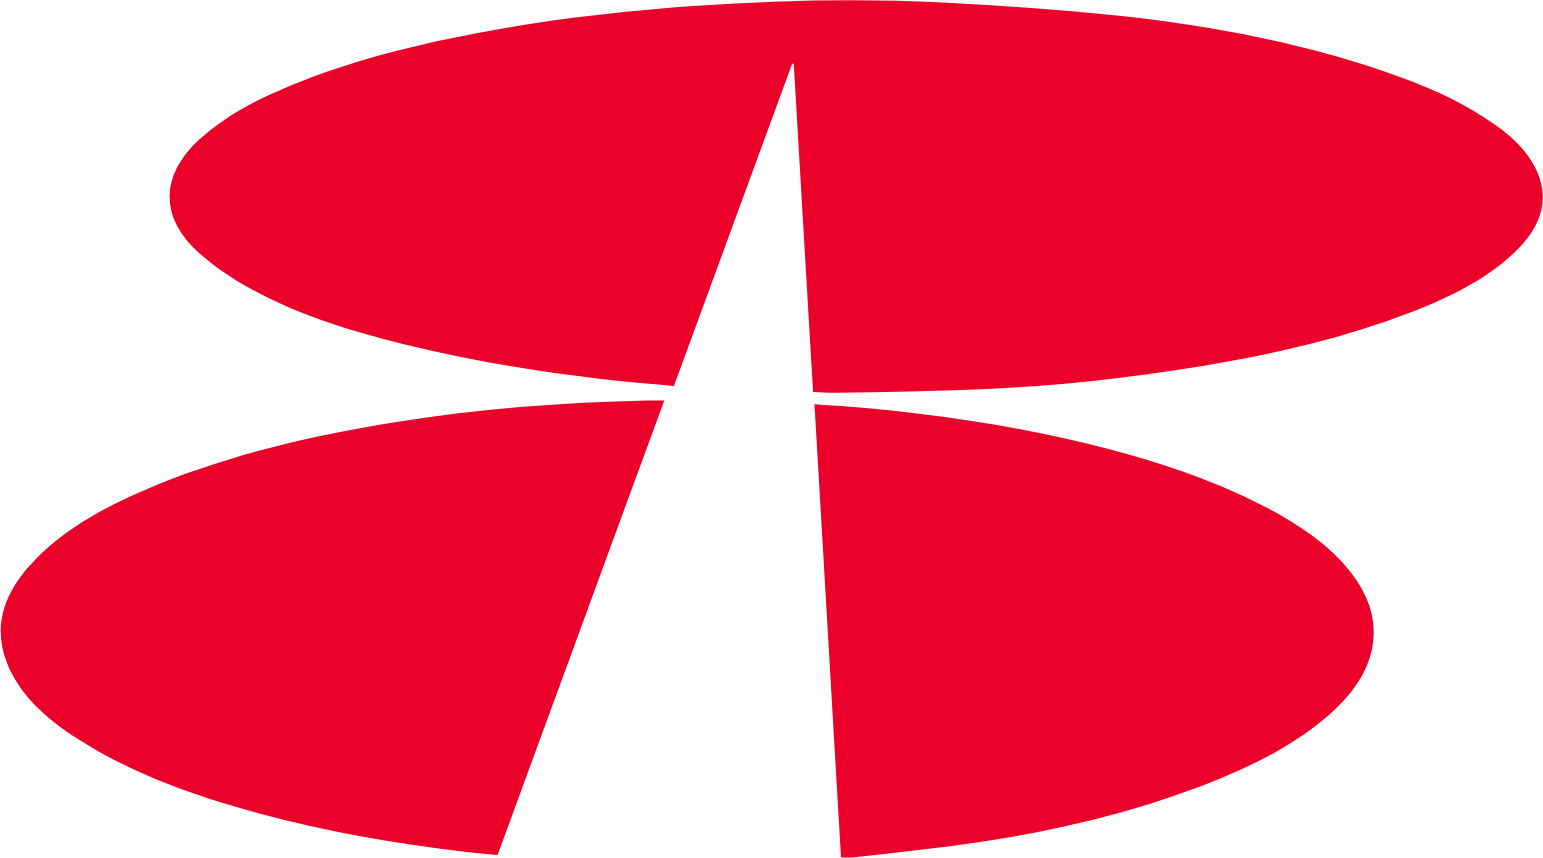 Banorte logo in transparent PNG format